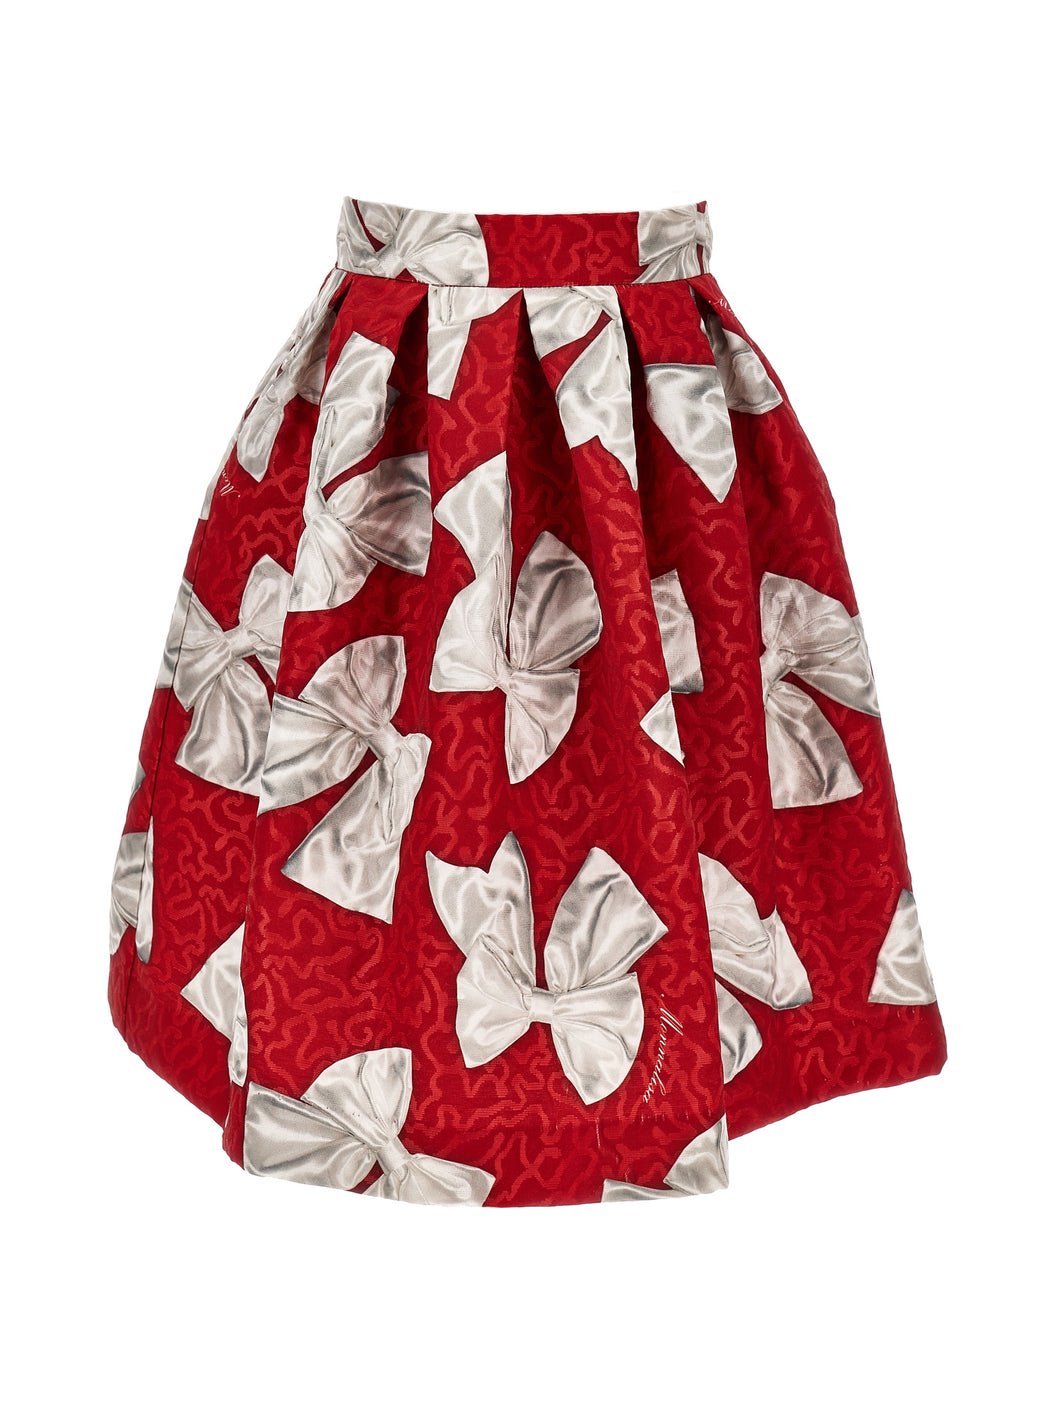 Bow brocade skirt